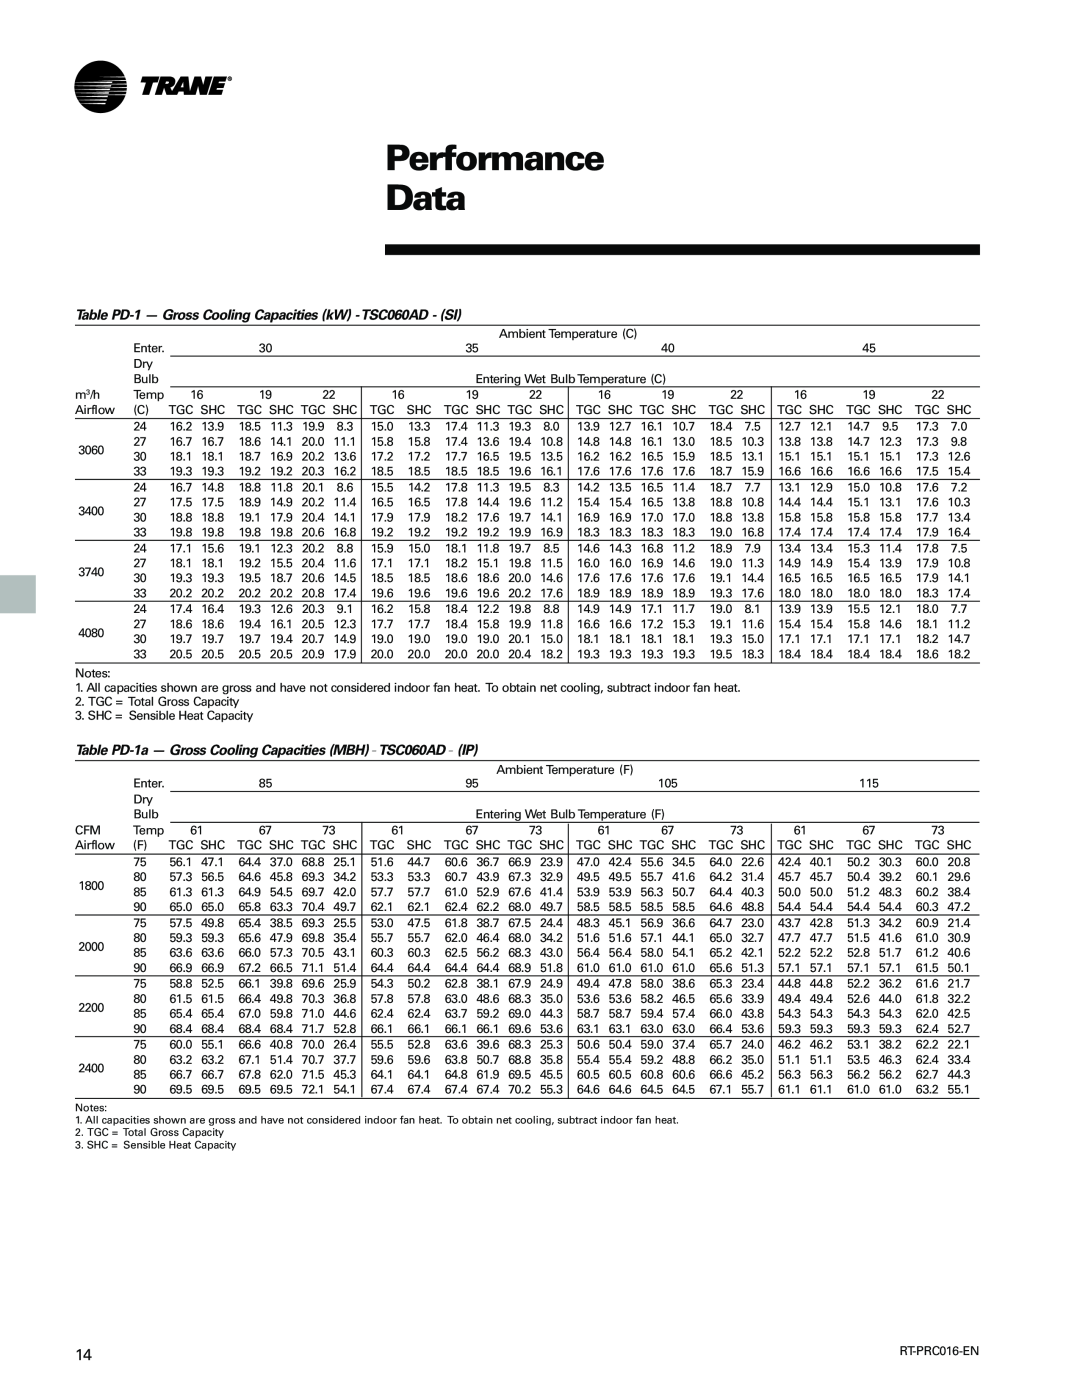 Trane TSC060-120 manual Performance Data 